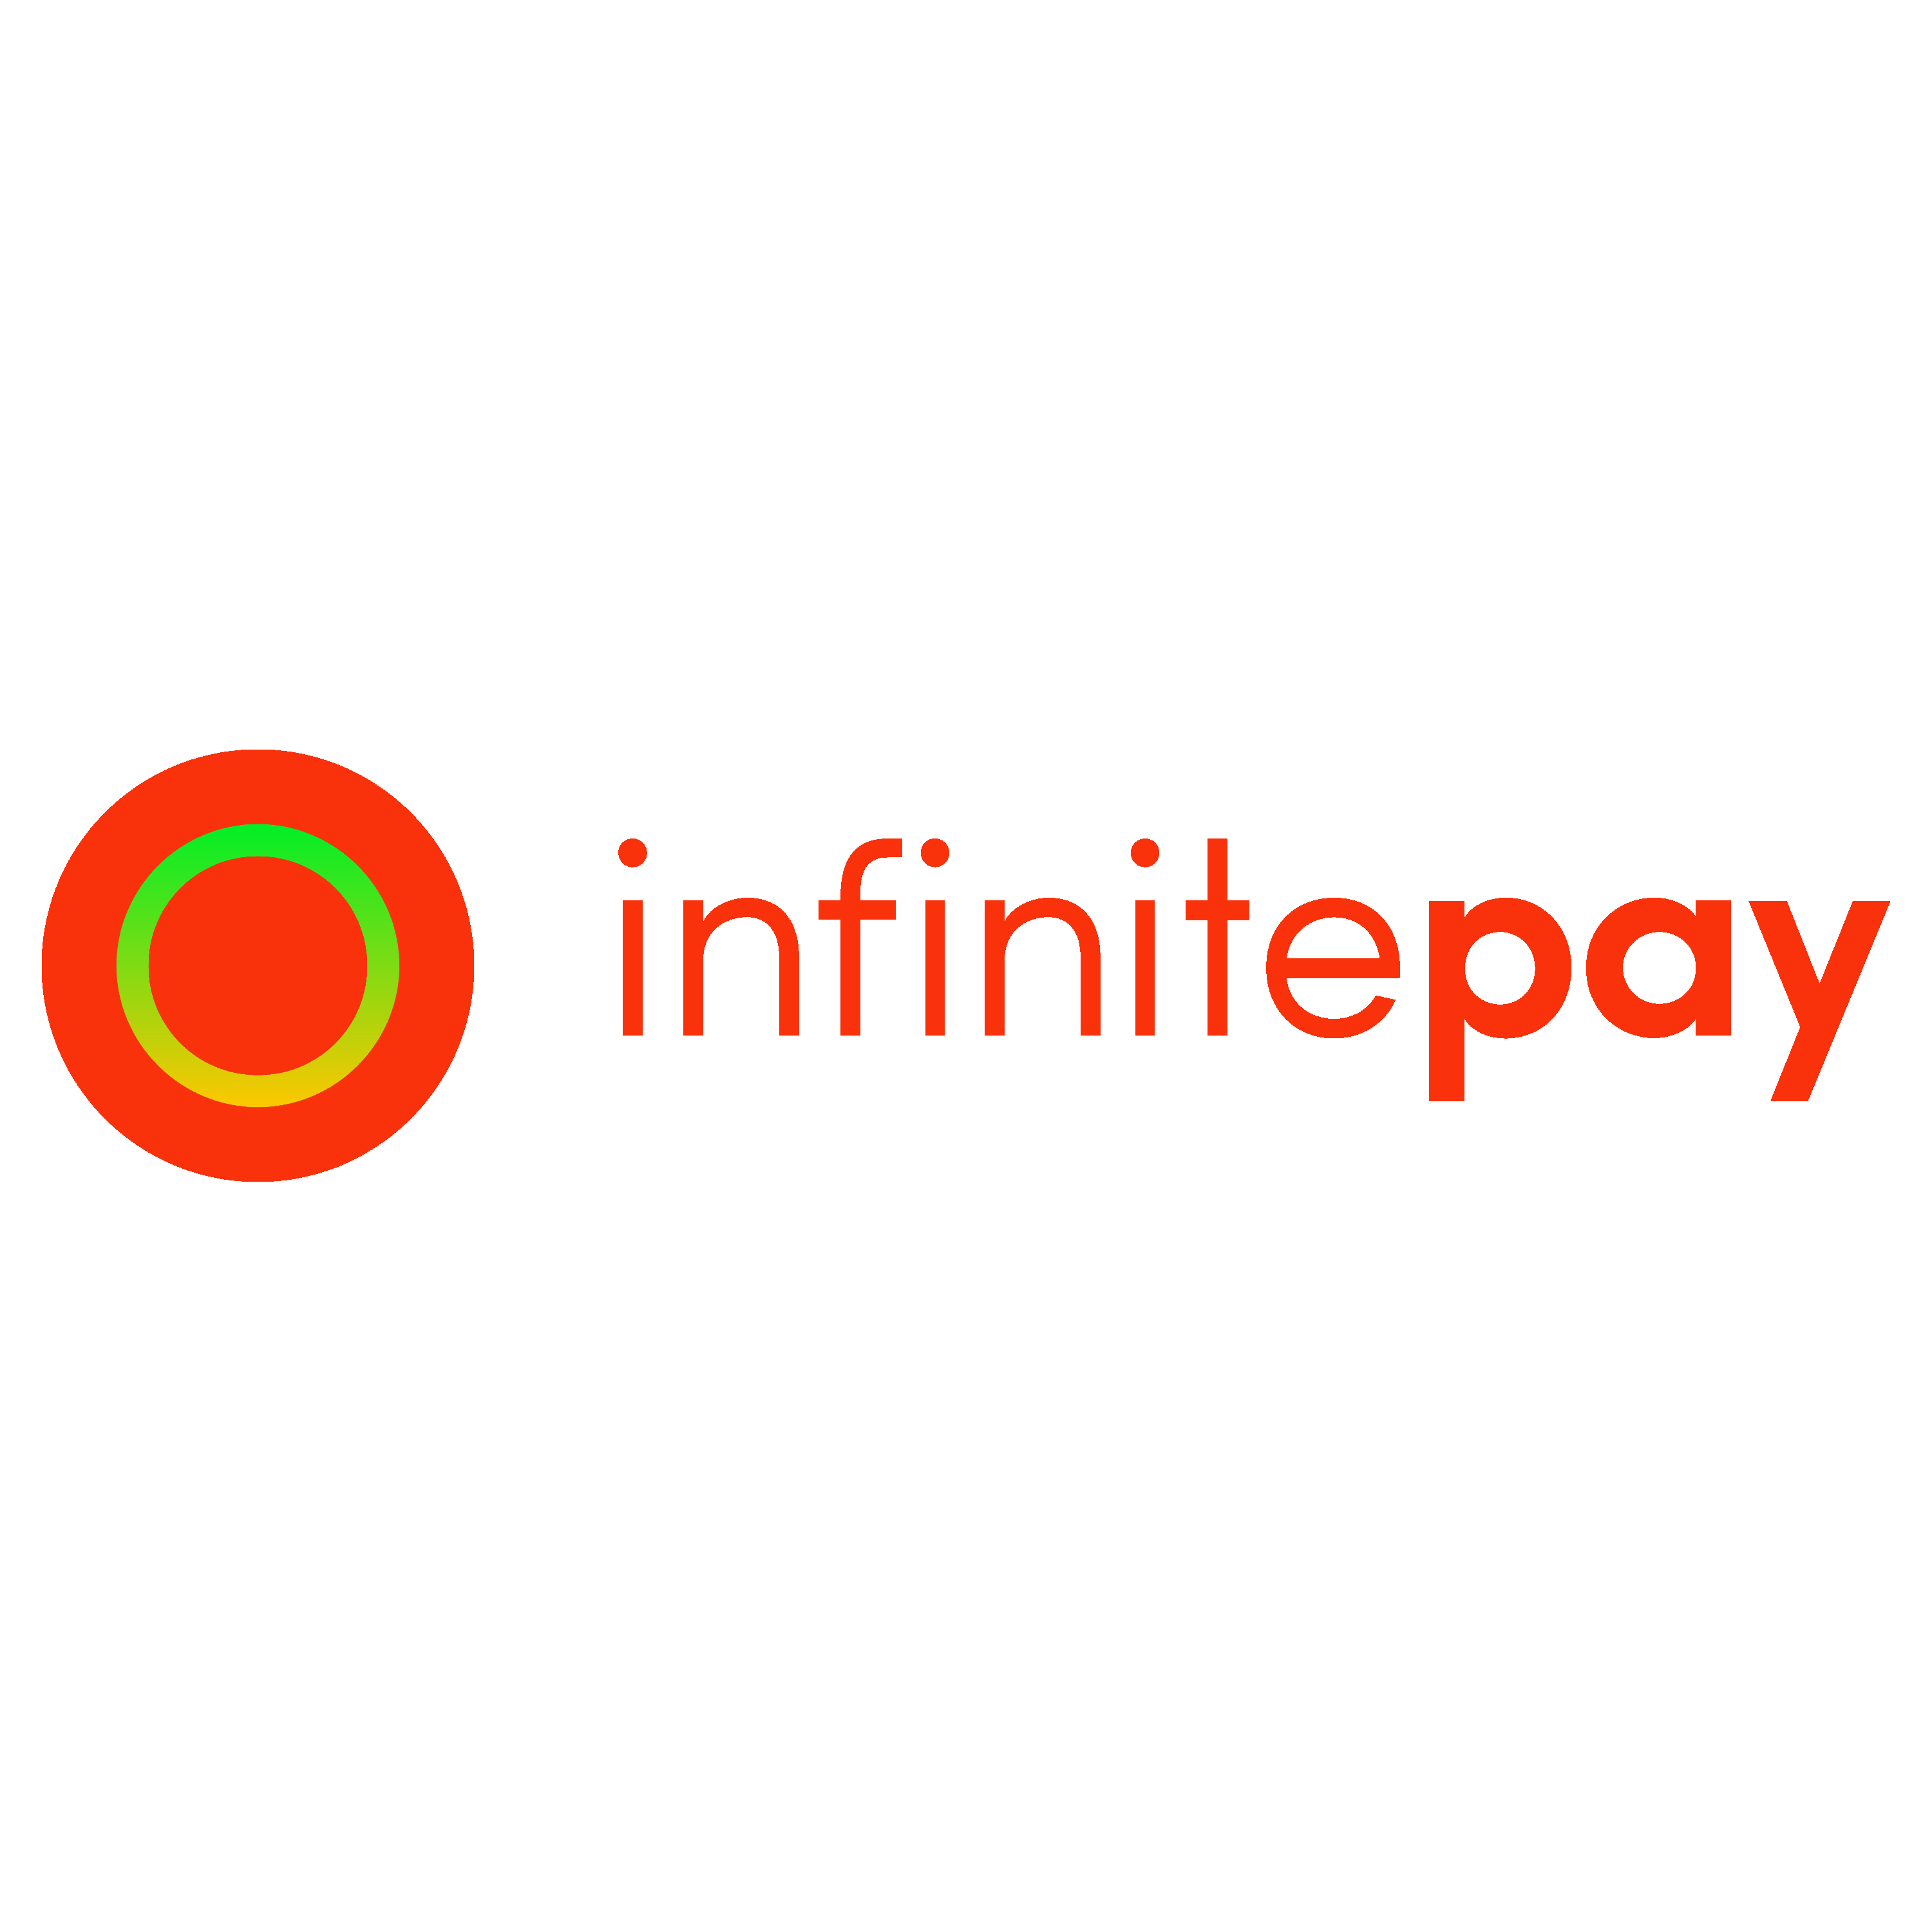 Infinitepay Logo  Transparent Gallery